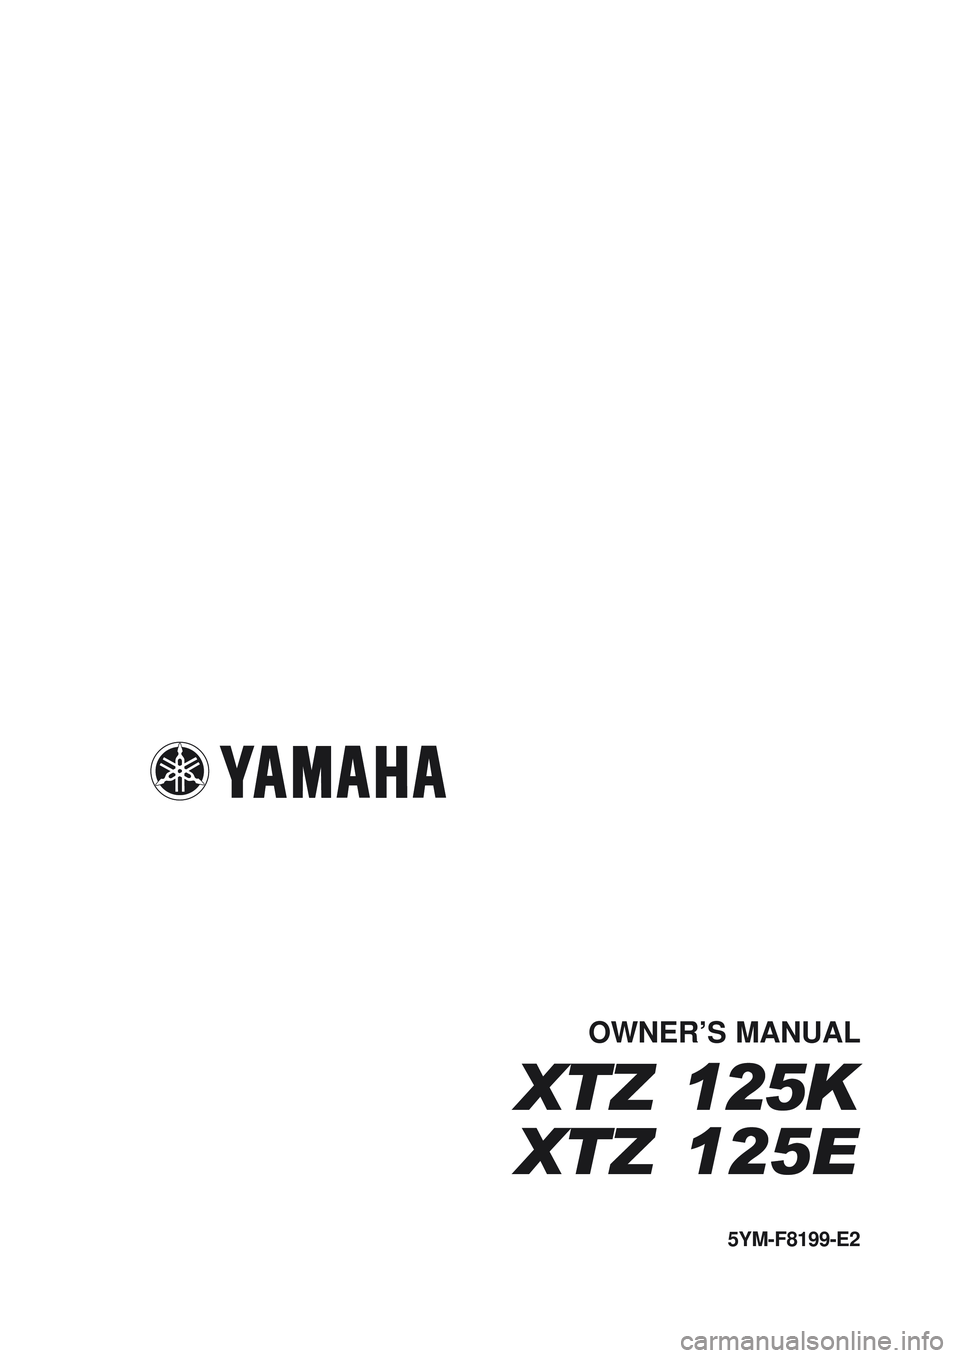 YAMAHA XTZ125 2007  Owners Manual I
I5YM-F8199-E2
OWNER’S MANUAL
XTZ 125K
XTZ 125E
5YM-F8199-E2
OWNER’S MANUAL
XTZ 125K
XTZ 125E 